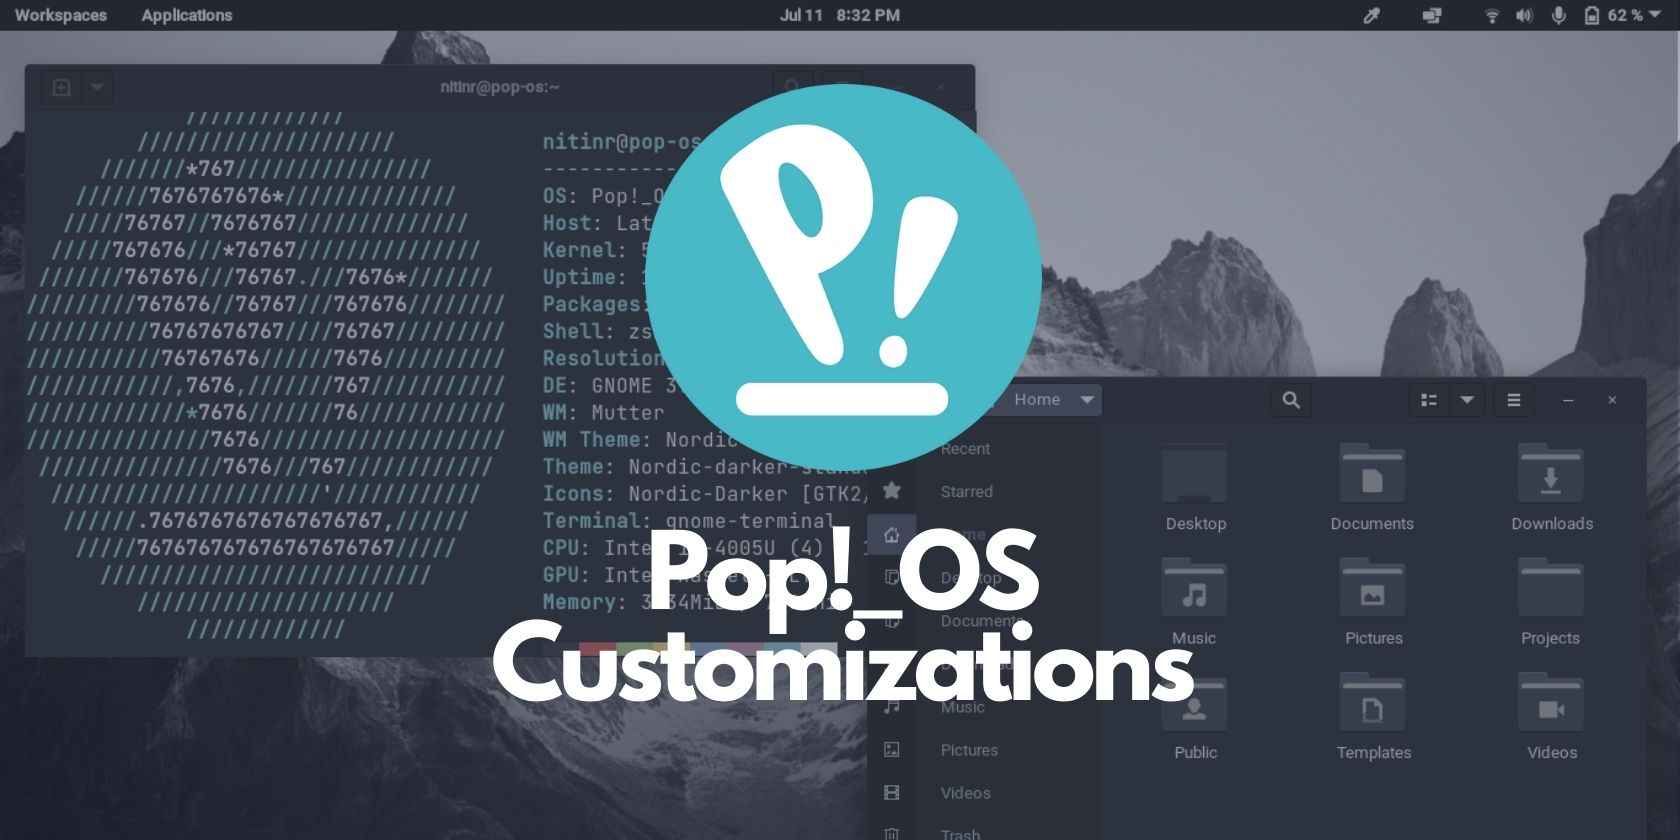 Pop!_OS customizations